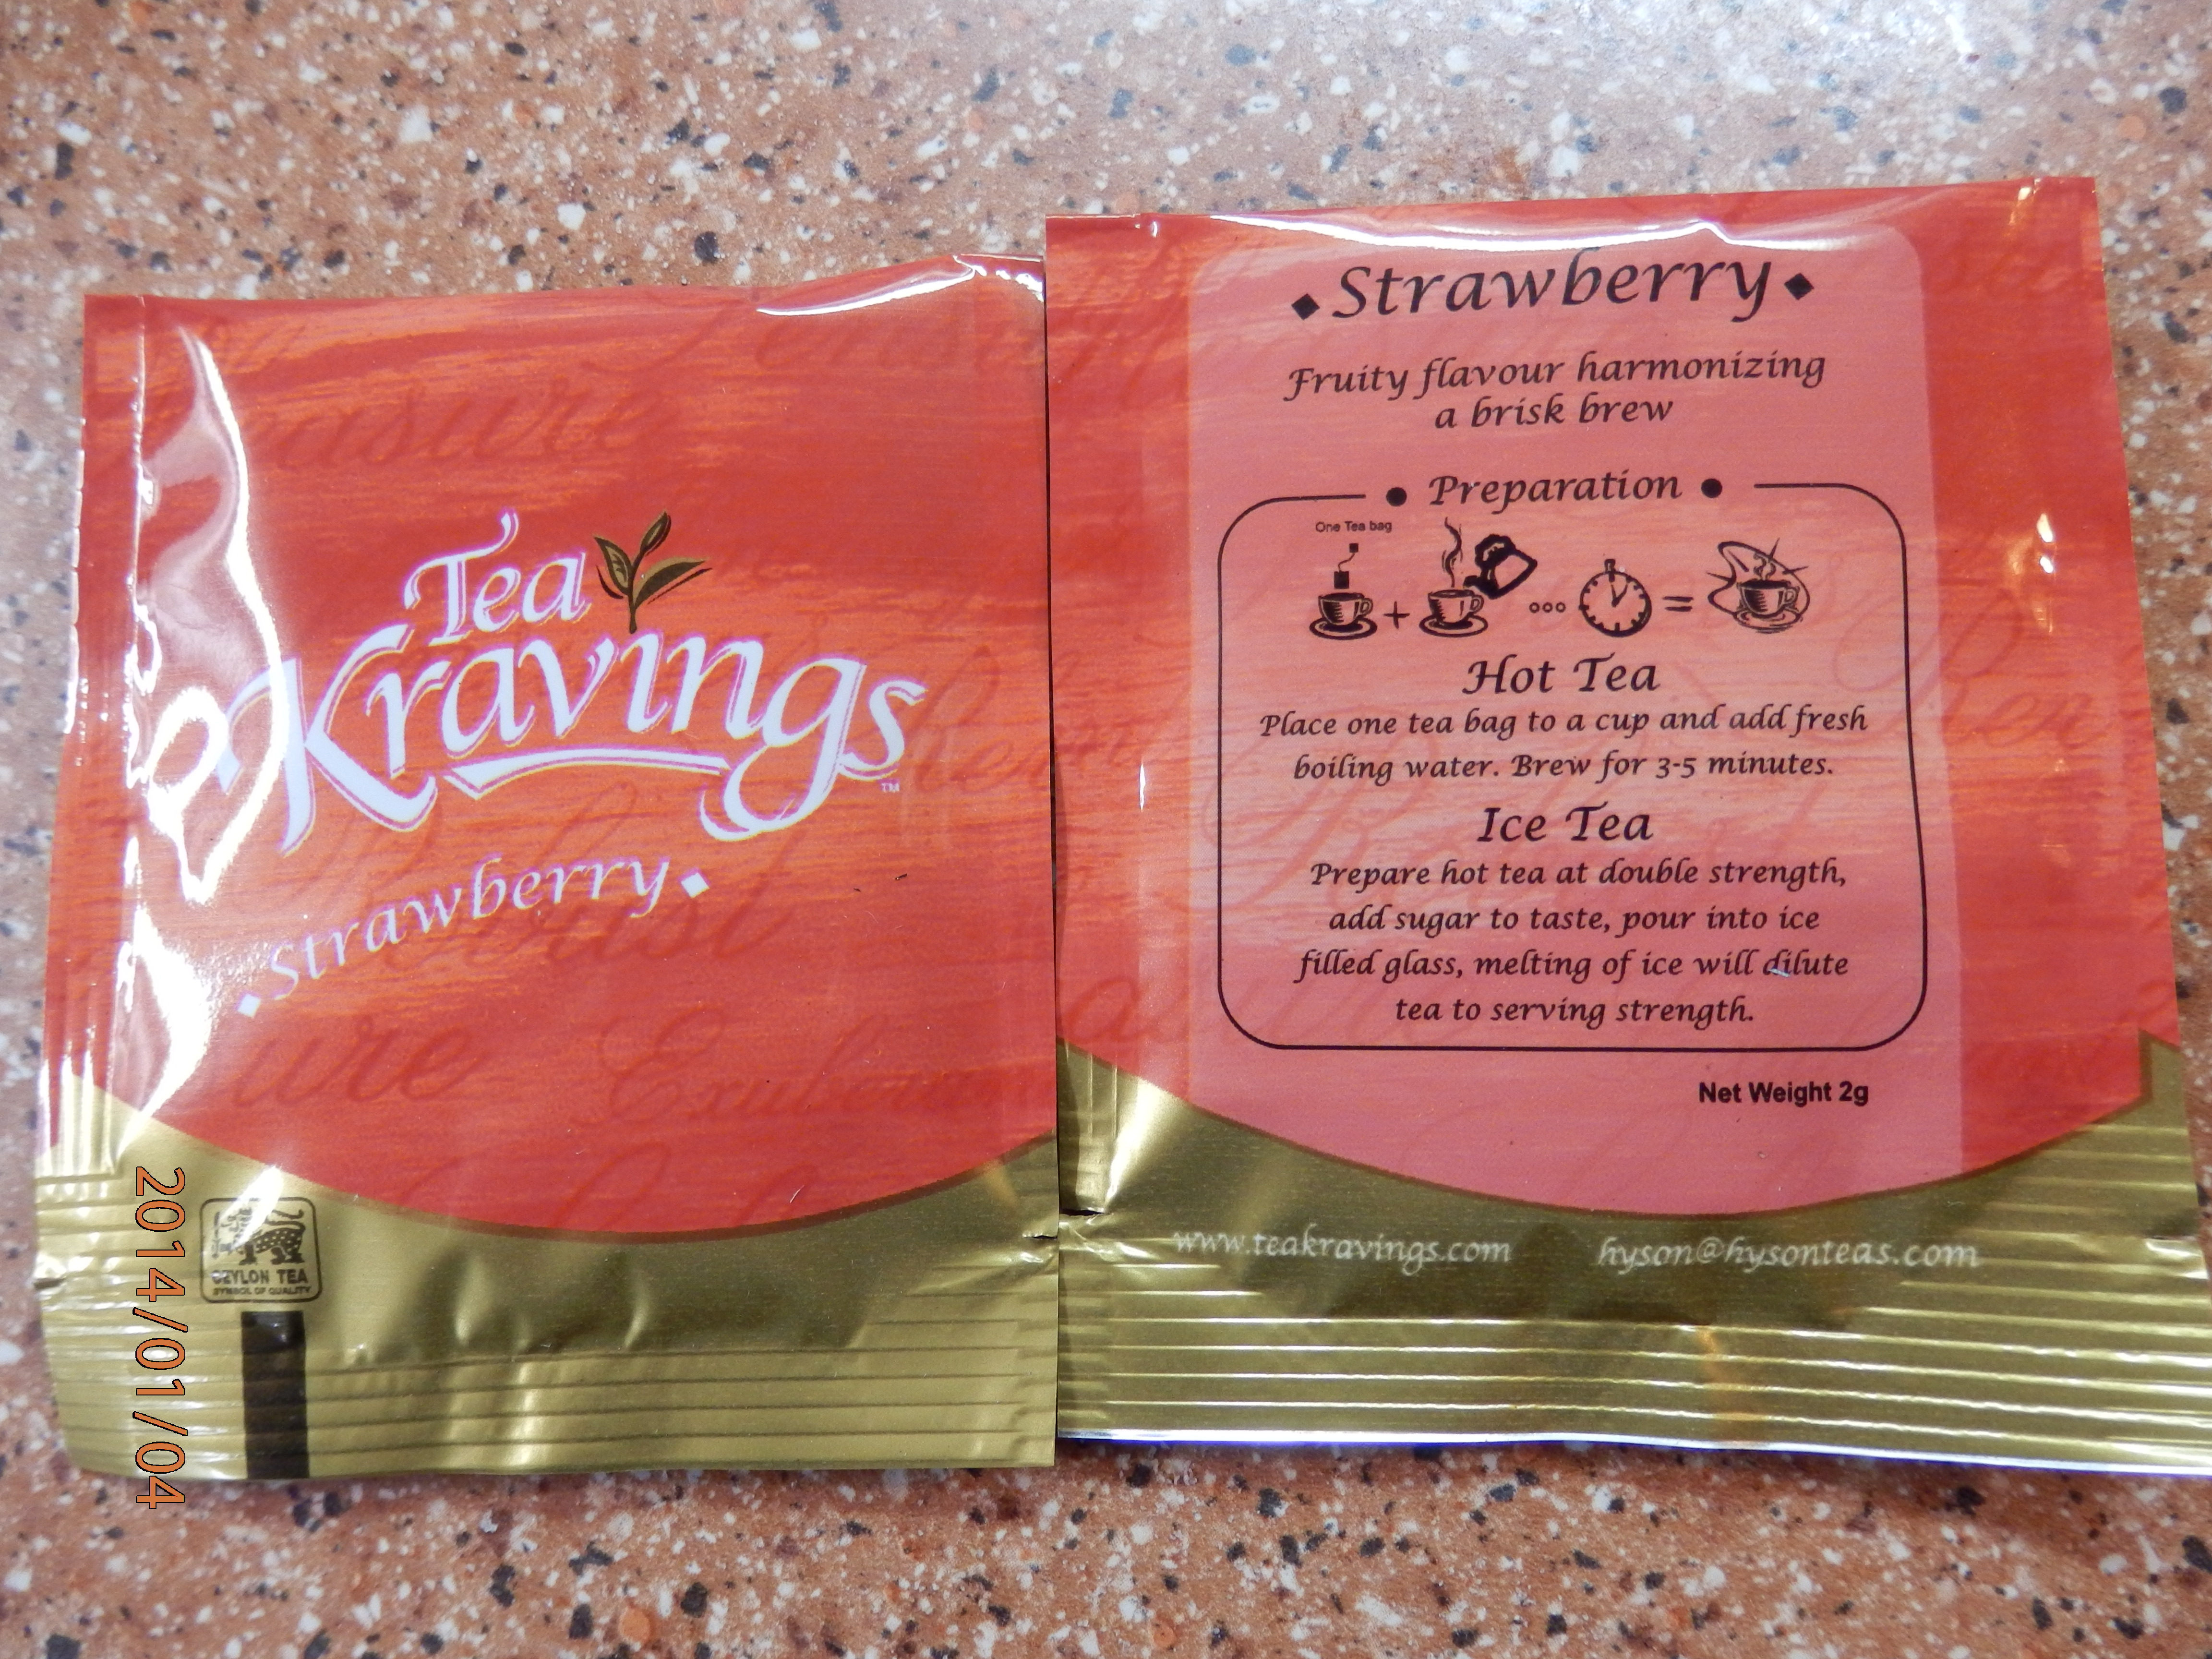 Tea Kravings - Strawberry